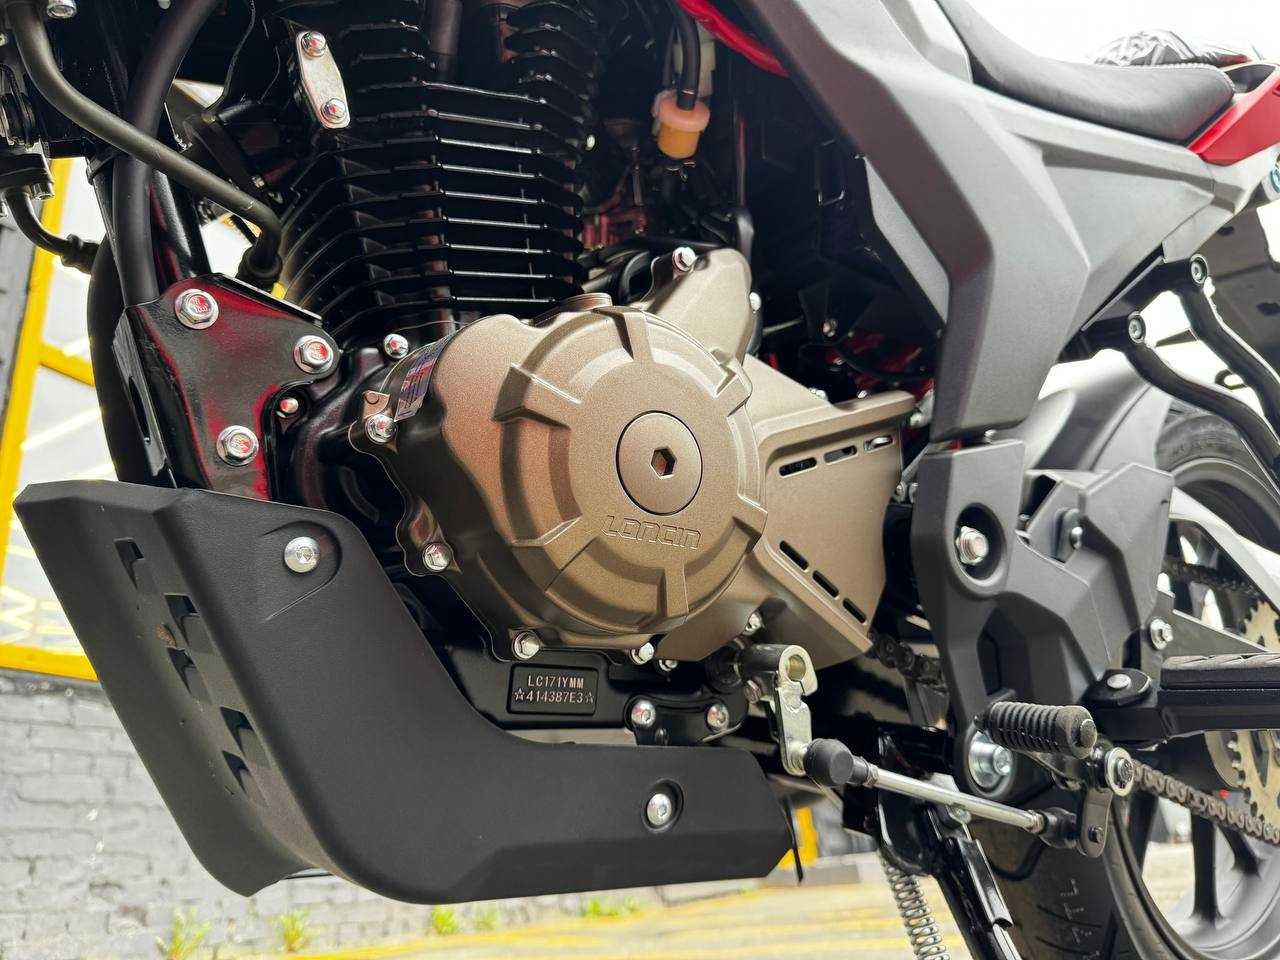 Мотоцикл LONCIN LX250-15D CR4 NEW (двигун LC171YMM)